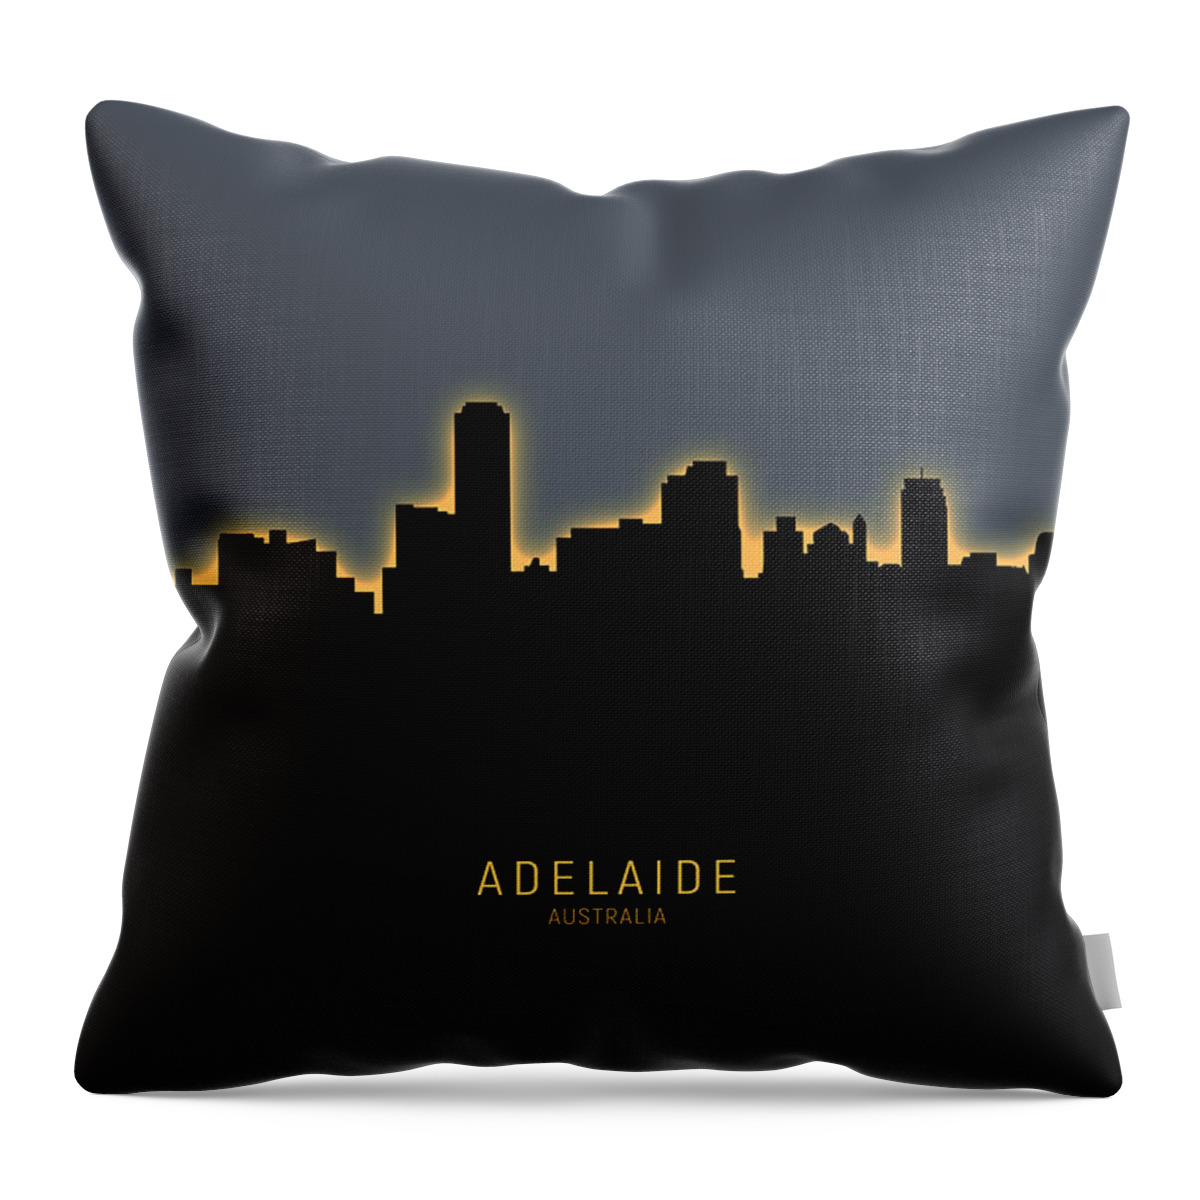 Adelaide Throw Pillow featuring the digital art Adelaide Australia Skyline #16 by Michael Tompsett